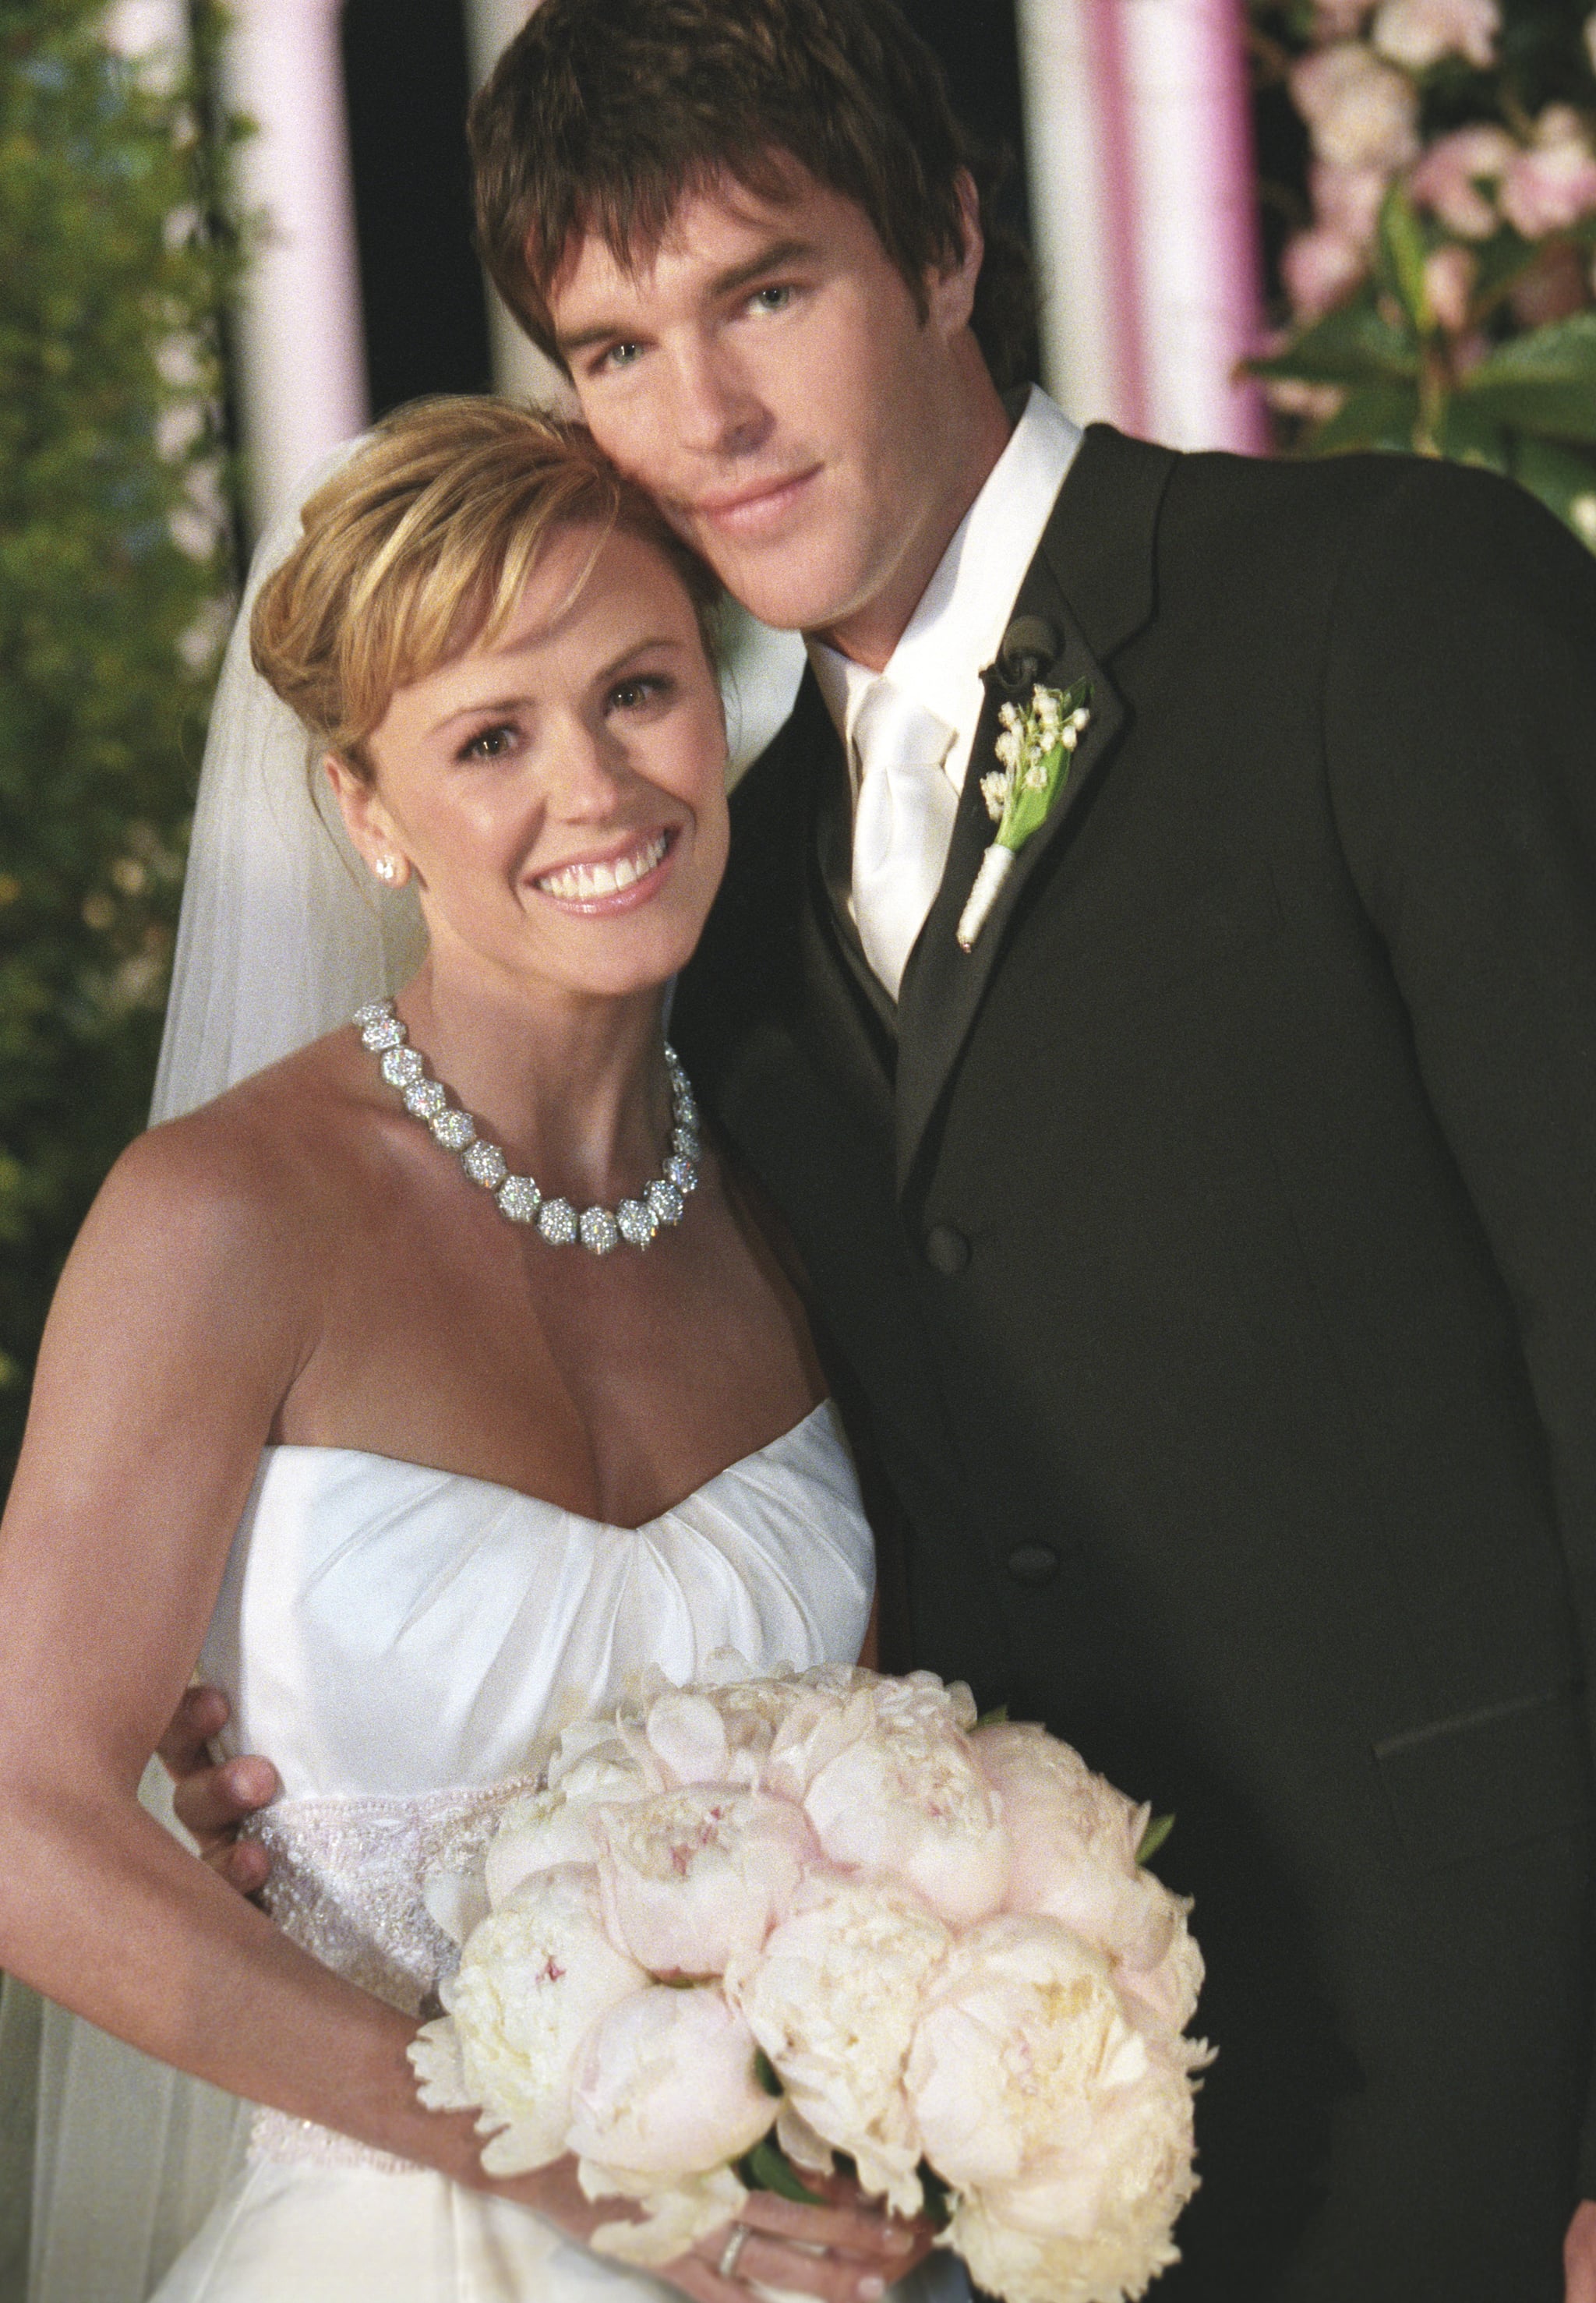 Trista Sutter with her handsome husband Ryan Sutter on their wedding day.